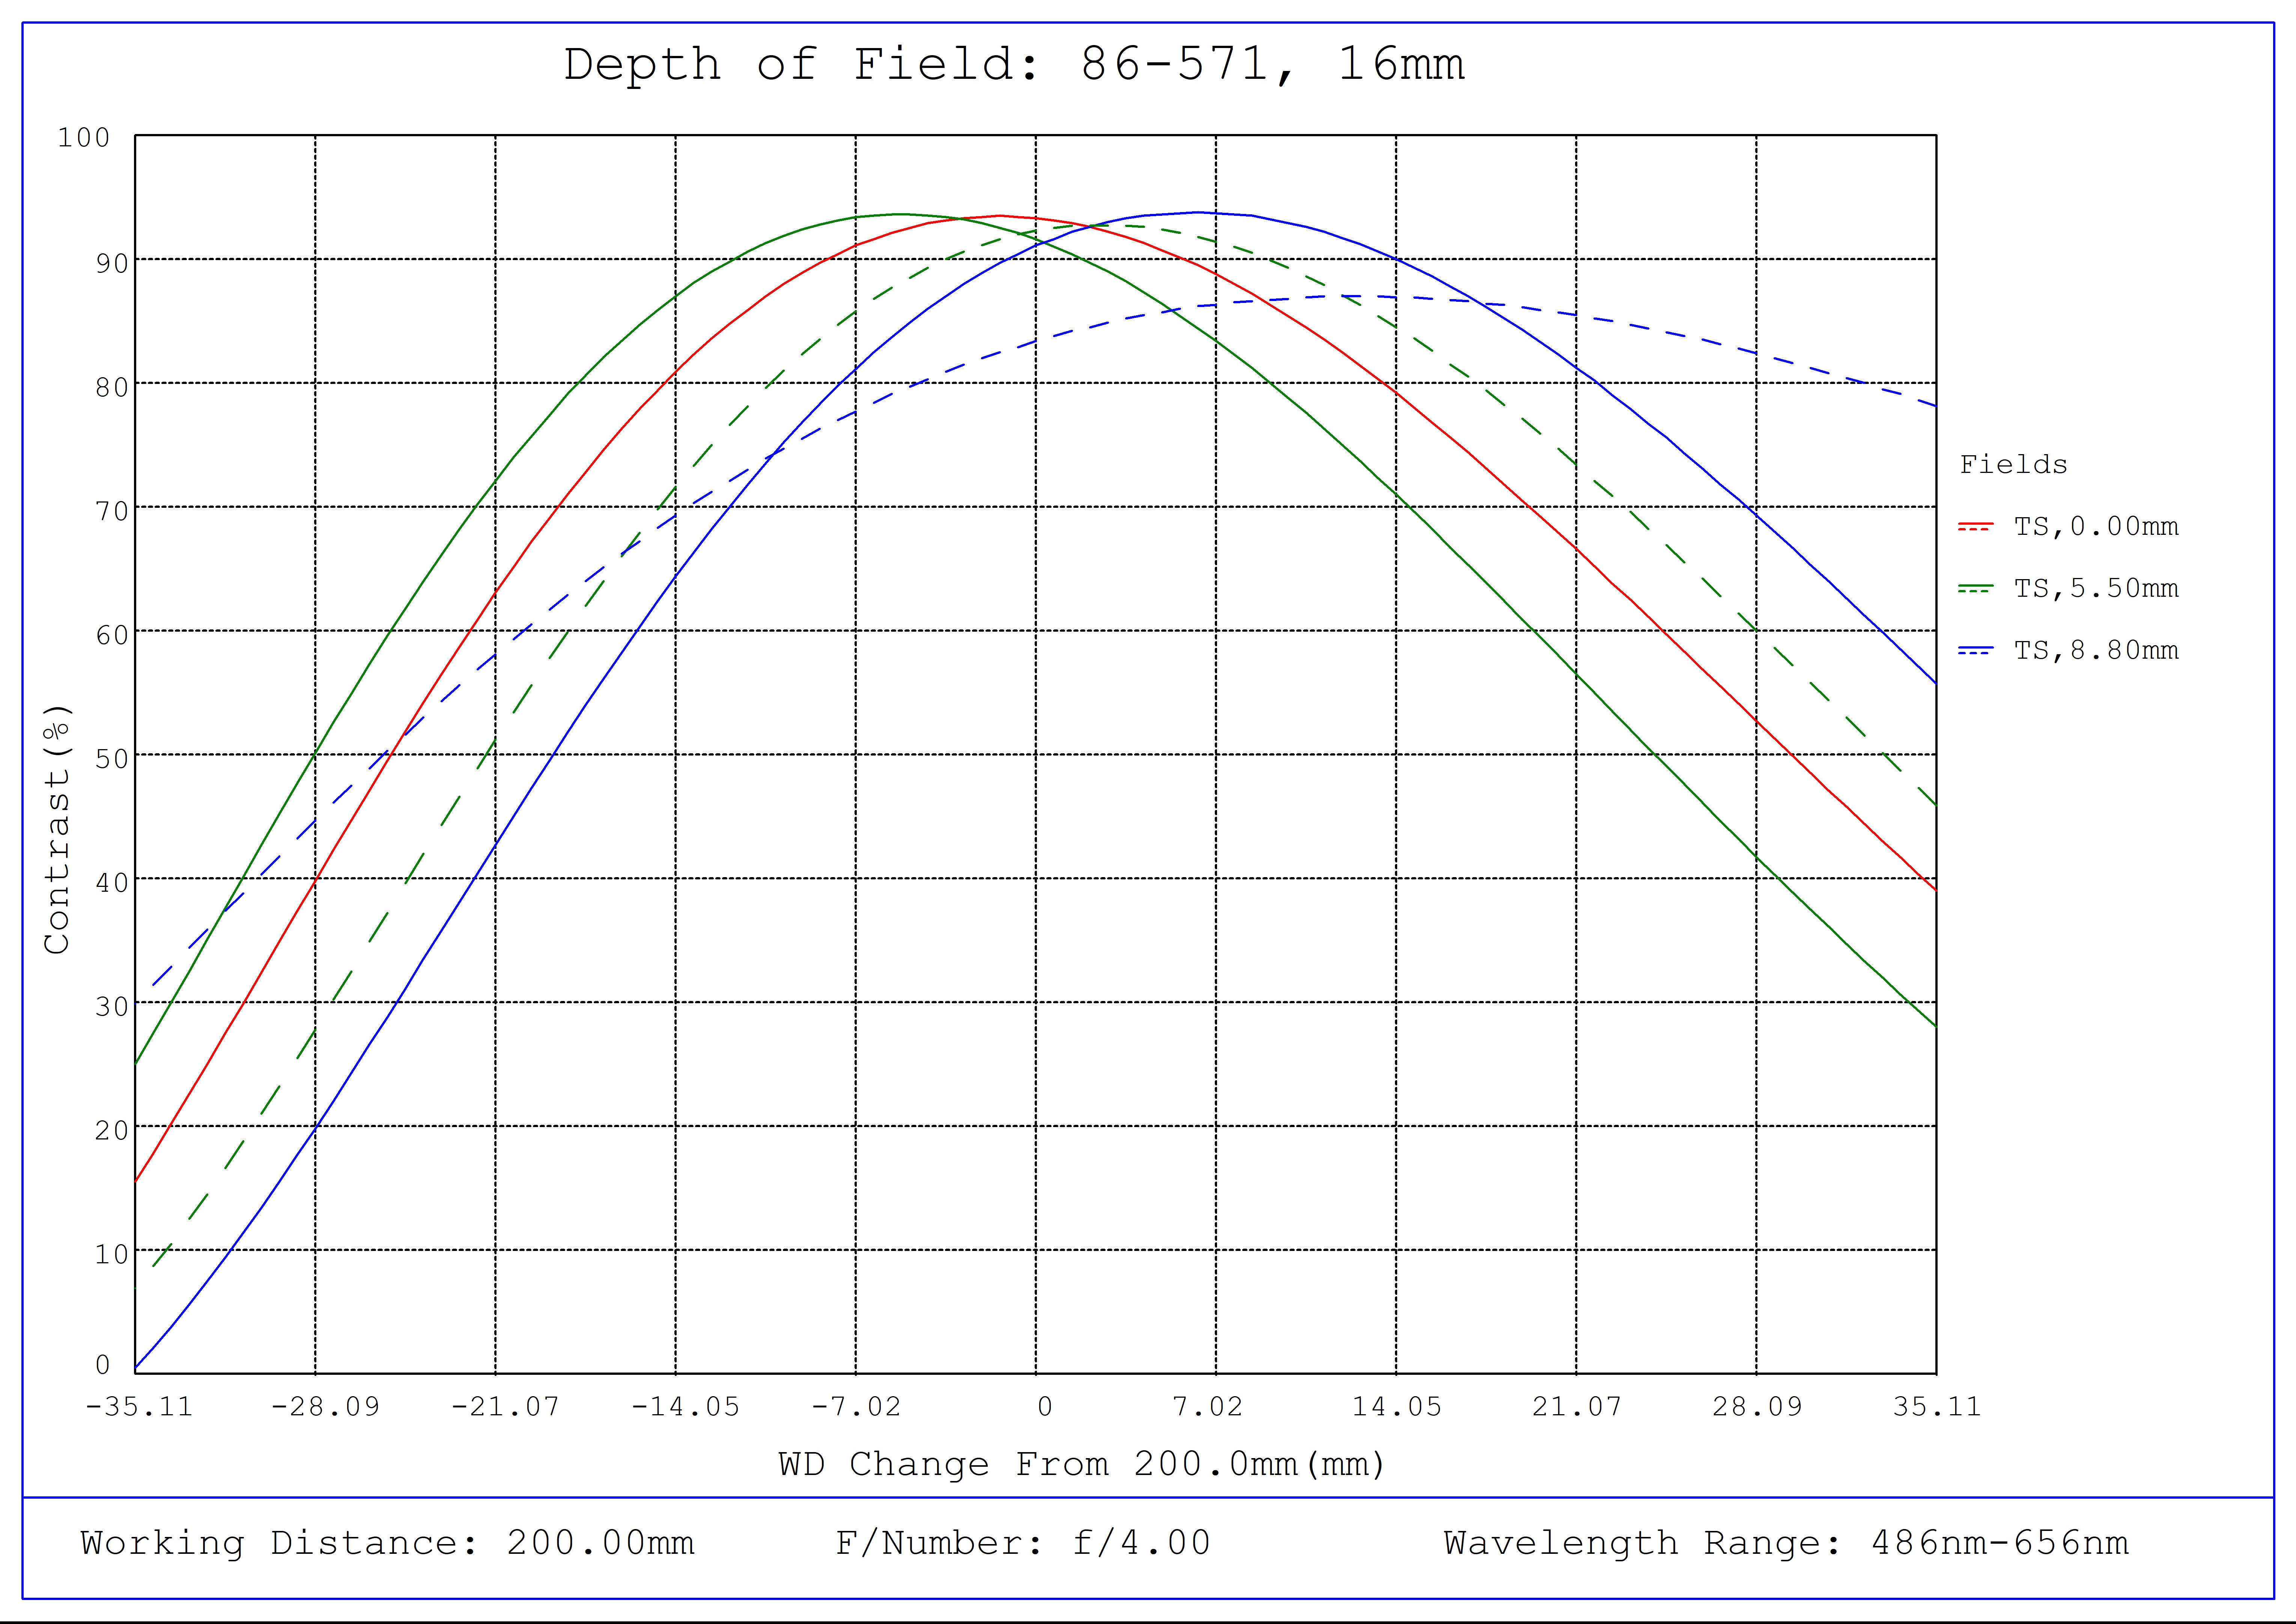 #86-571, 16mm Focal Length, HP Series Fixed Focal Length Lens, Depth of Field Plot, 200mm Working Distance, f4